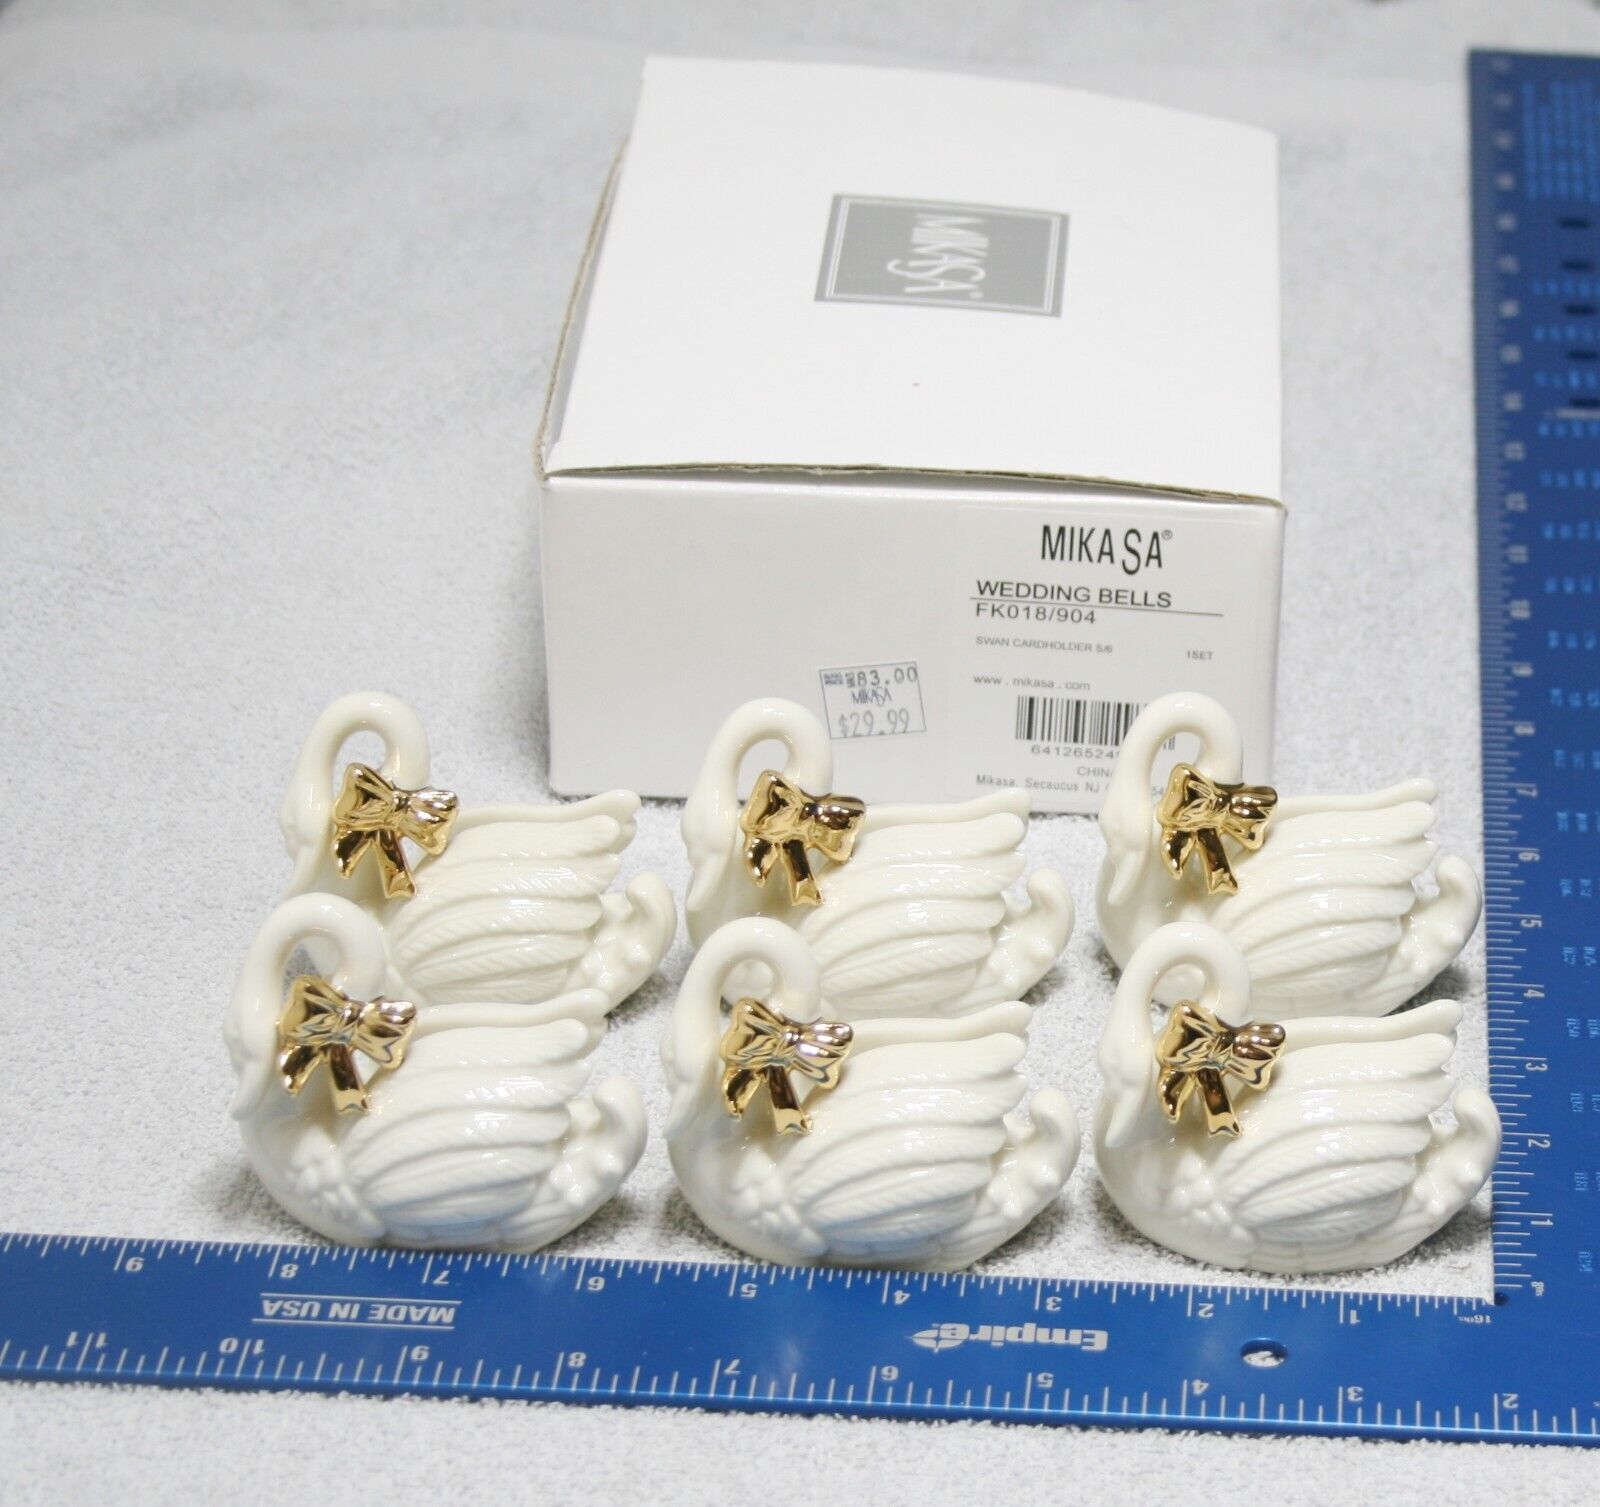 Set of 6 Mikasa PORCELAIN IVORY GOLD SWAN CARD HOLDERS Wedding Bells FK018/904